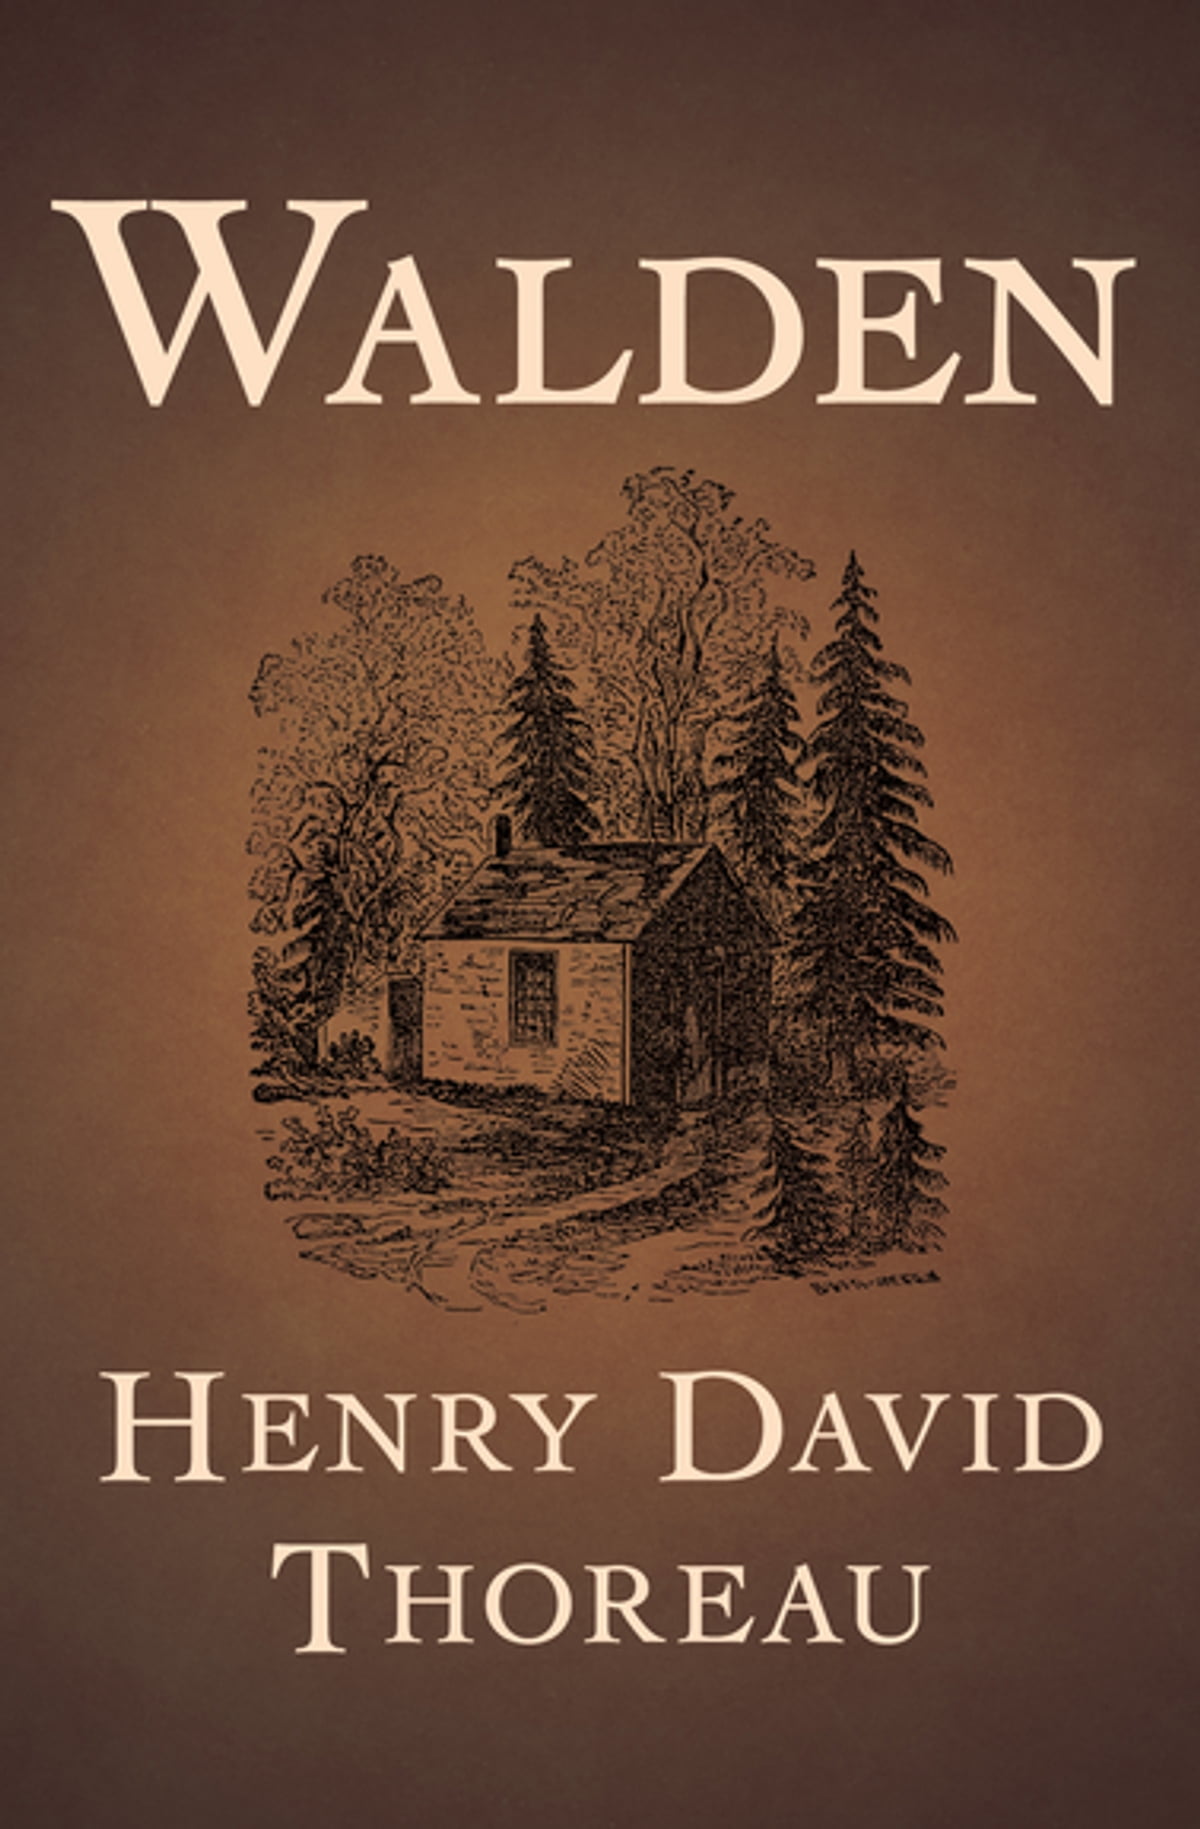 John Updike, Henry David Thoreau, J. Lyndon Shanley: Walden (2016, Princeton University Press)